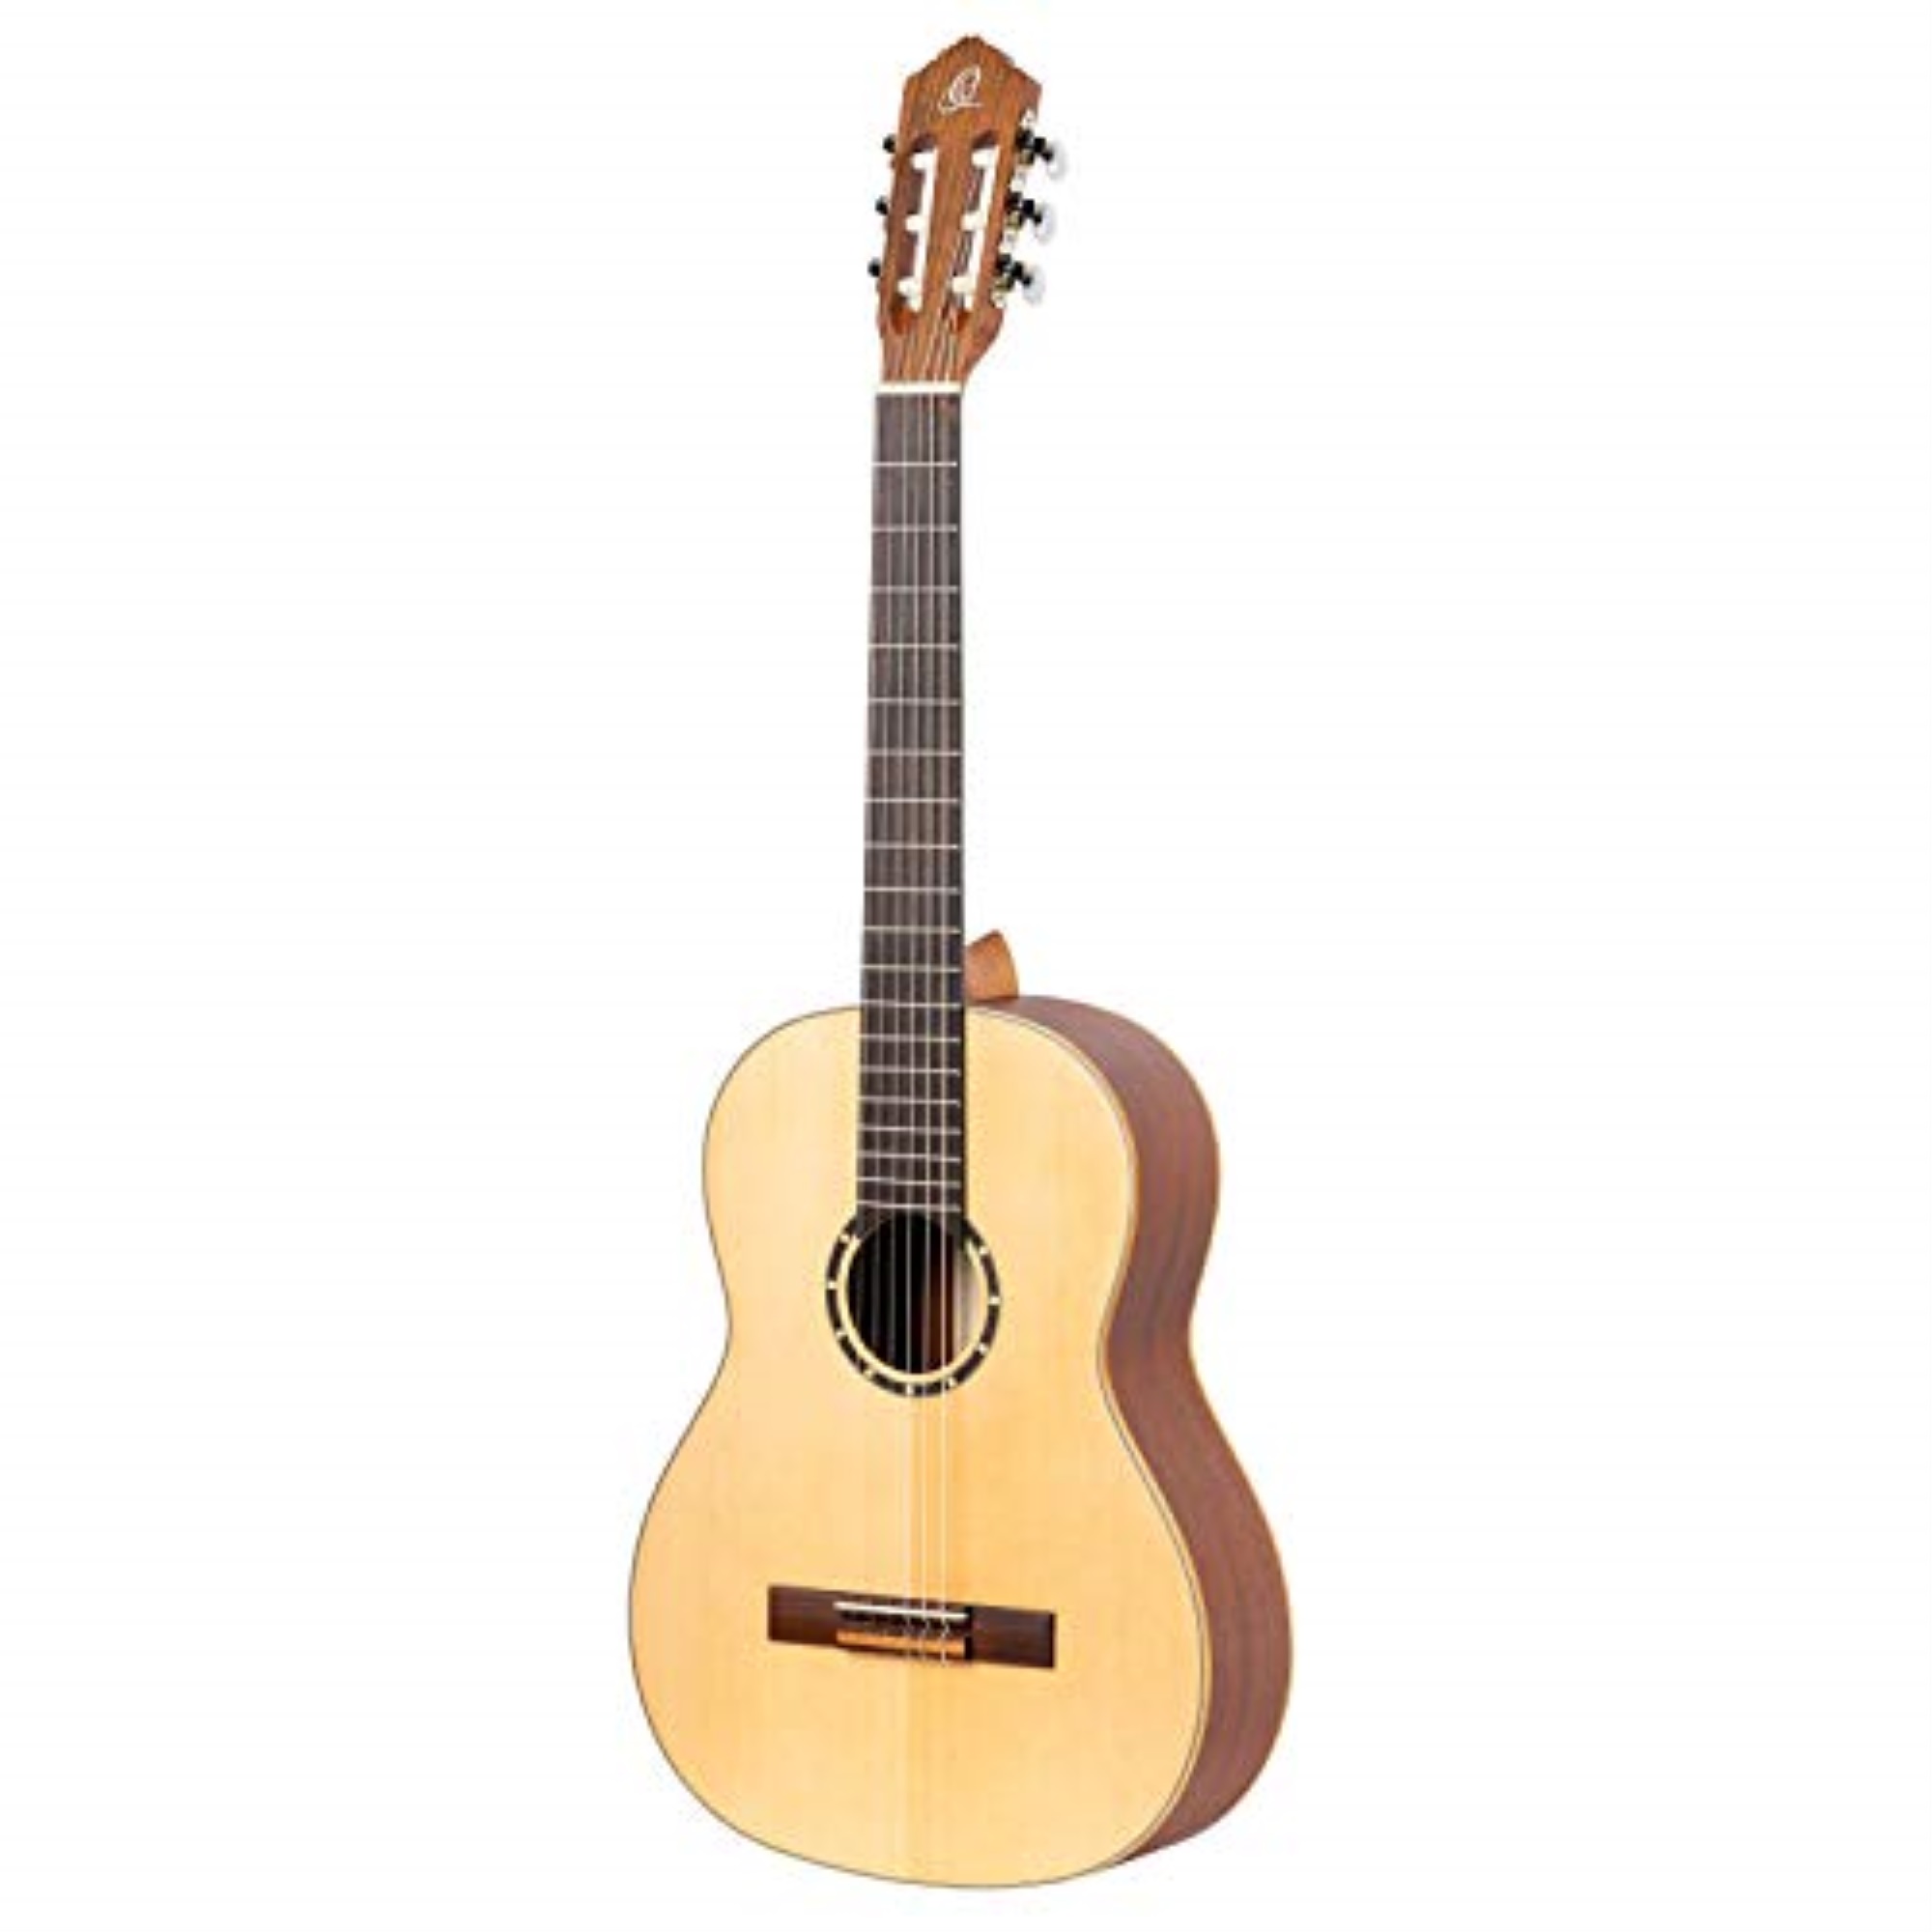 Ortega Guitars Family Series Full Size Left-Handed Nylon Classical Guitar with Bag